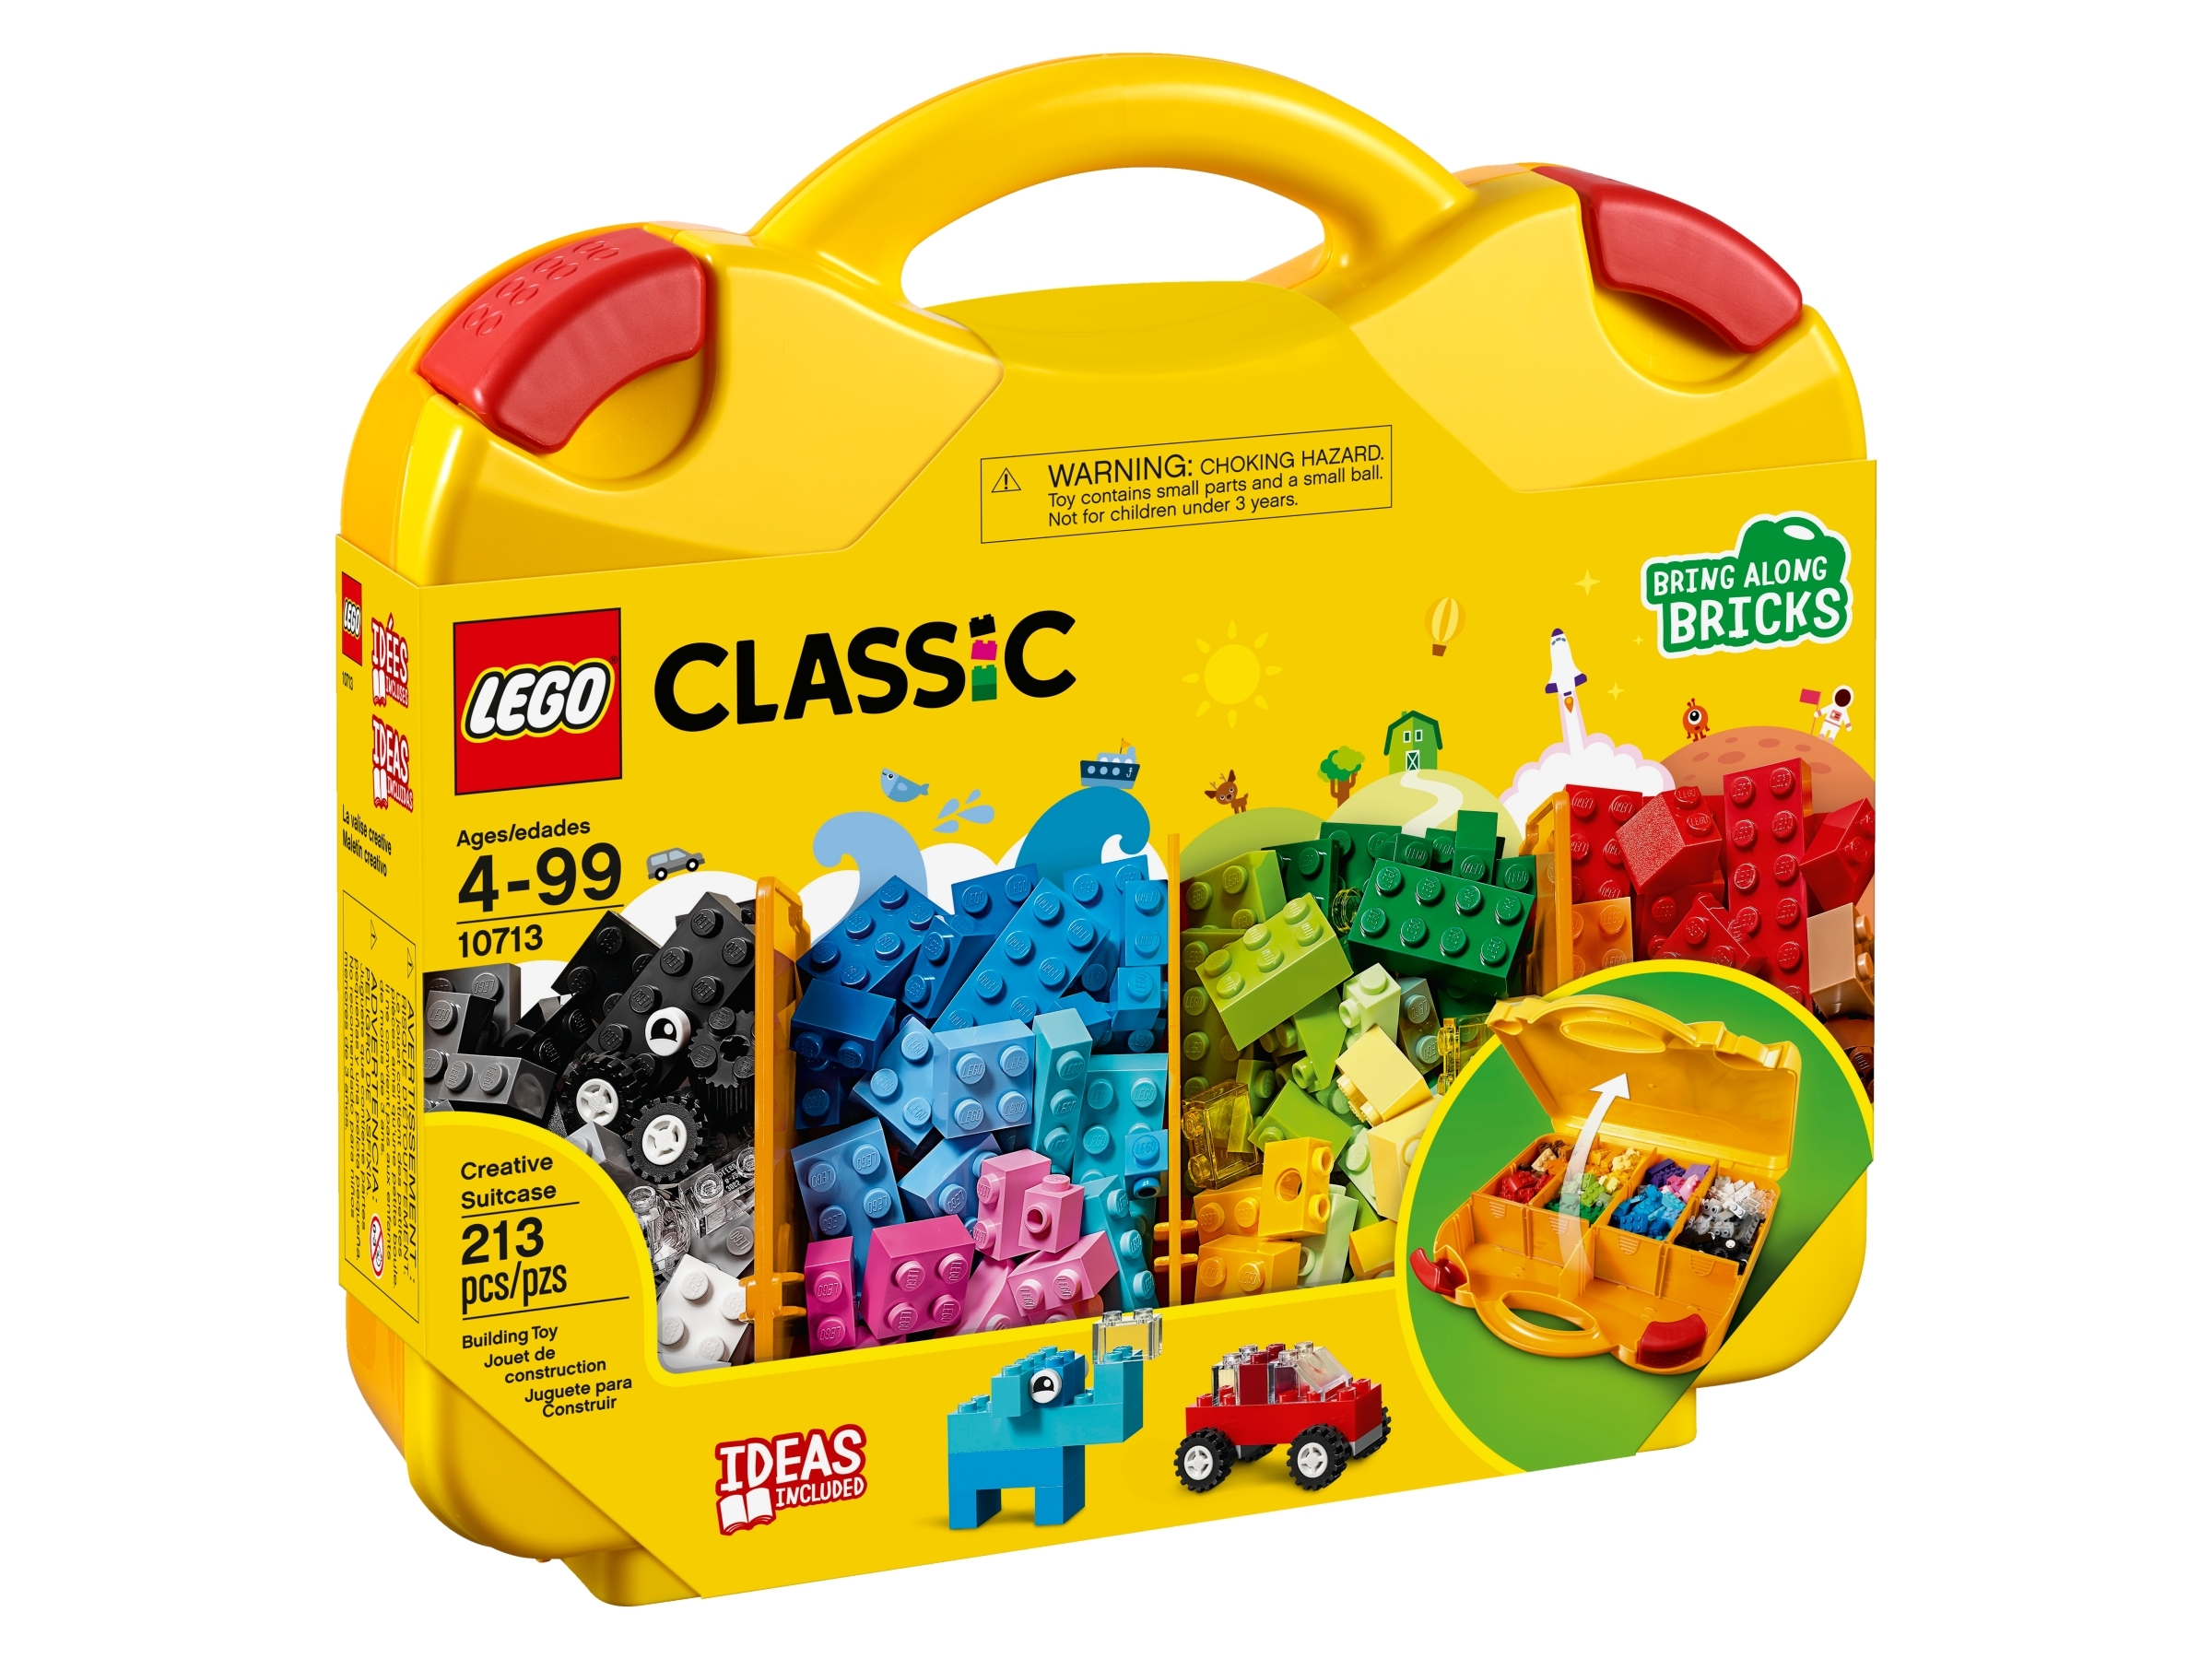 213 Pieces NEW LEGO 10713 Kids Classic Creative Suitcase Building Kit 